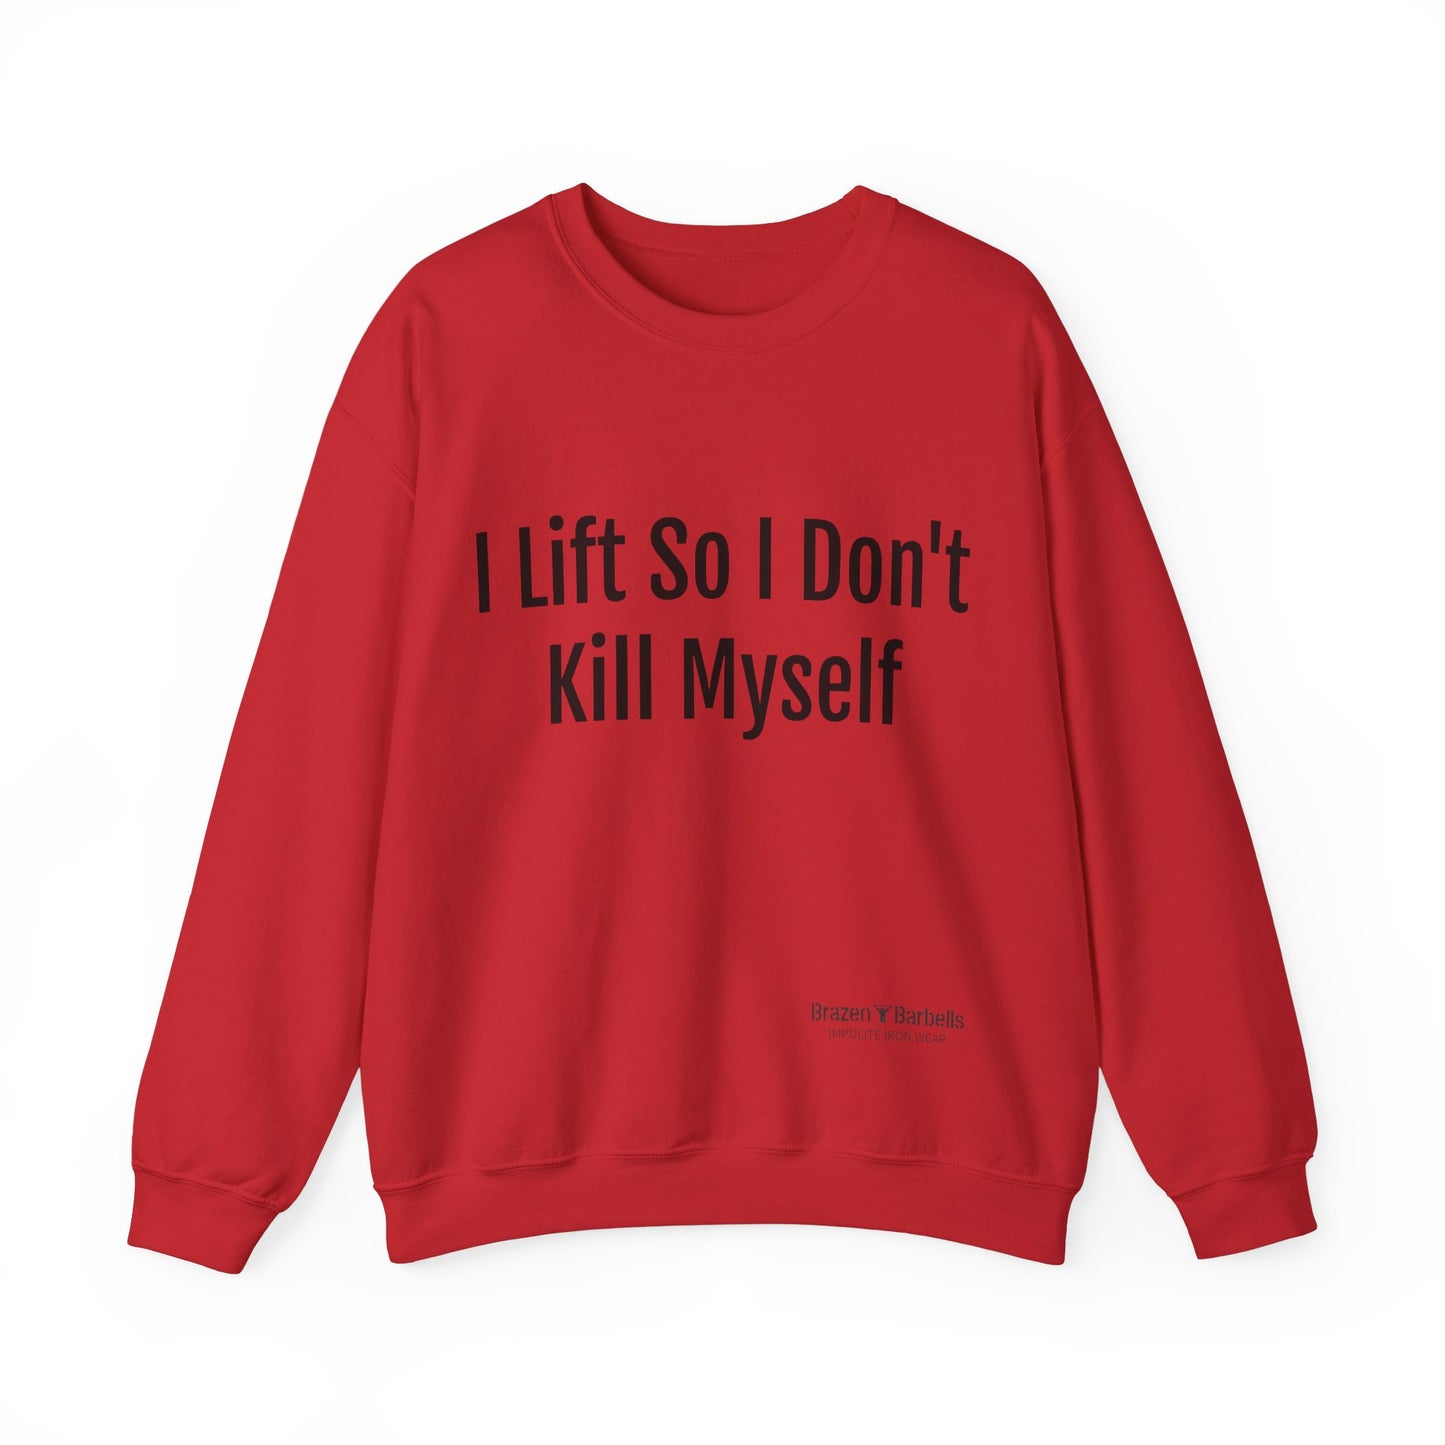 I lift so I don't kill myself Sweatshirt